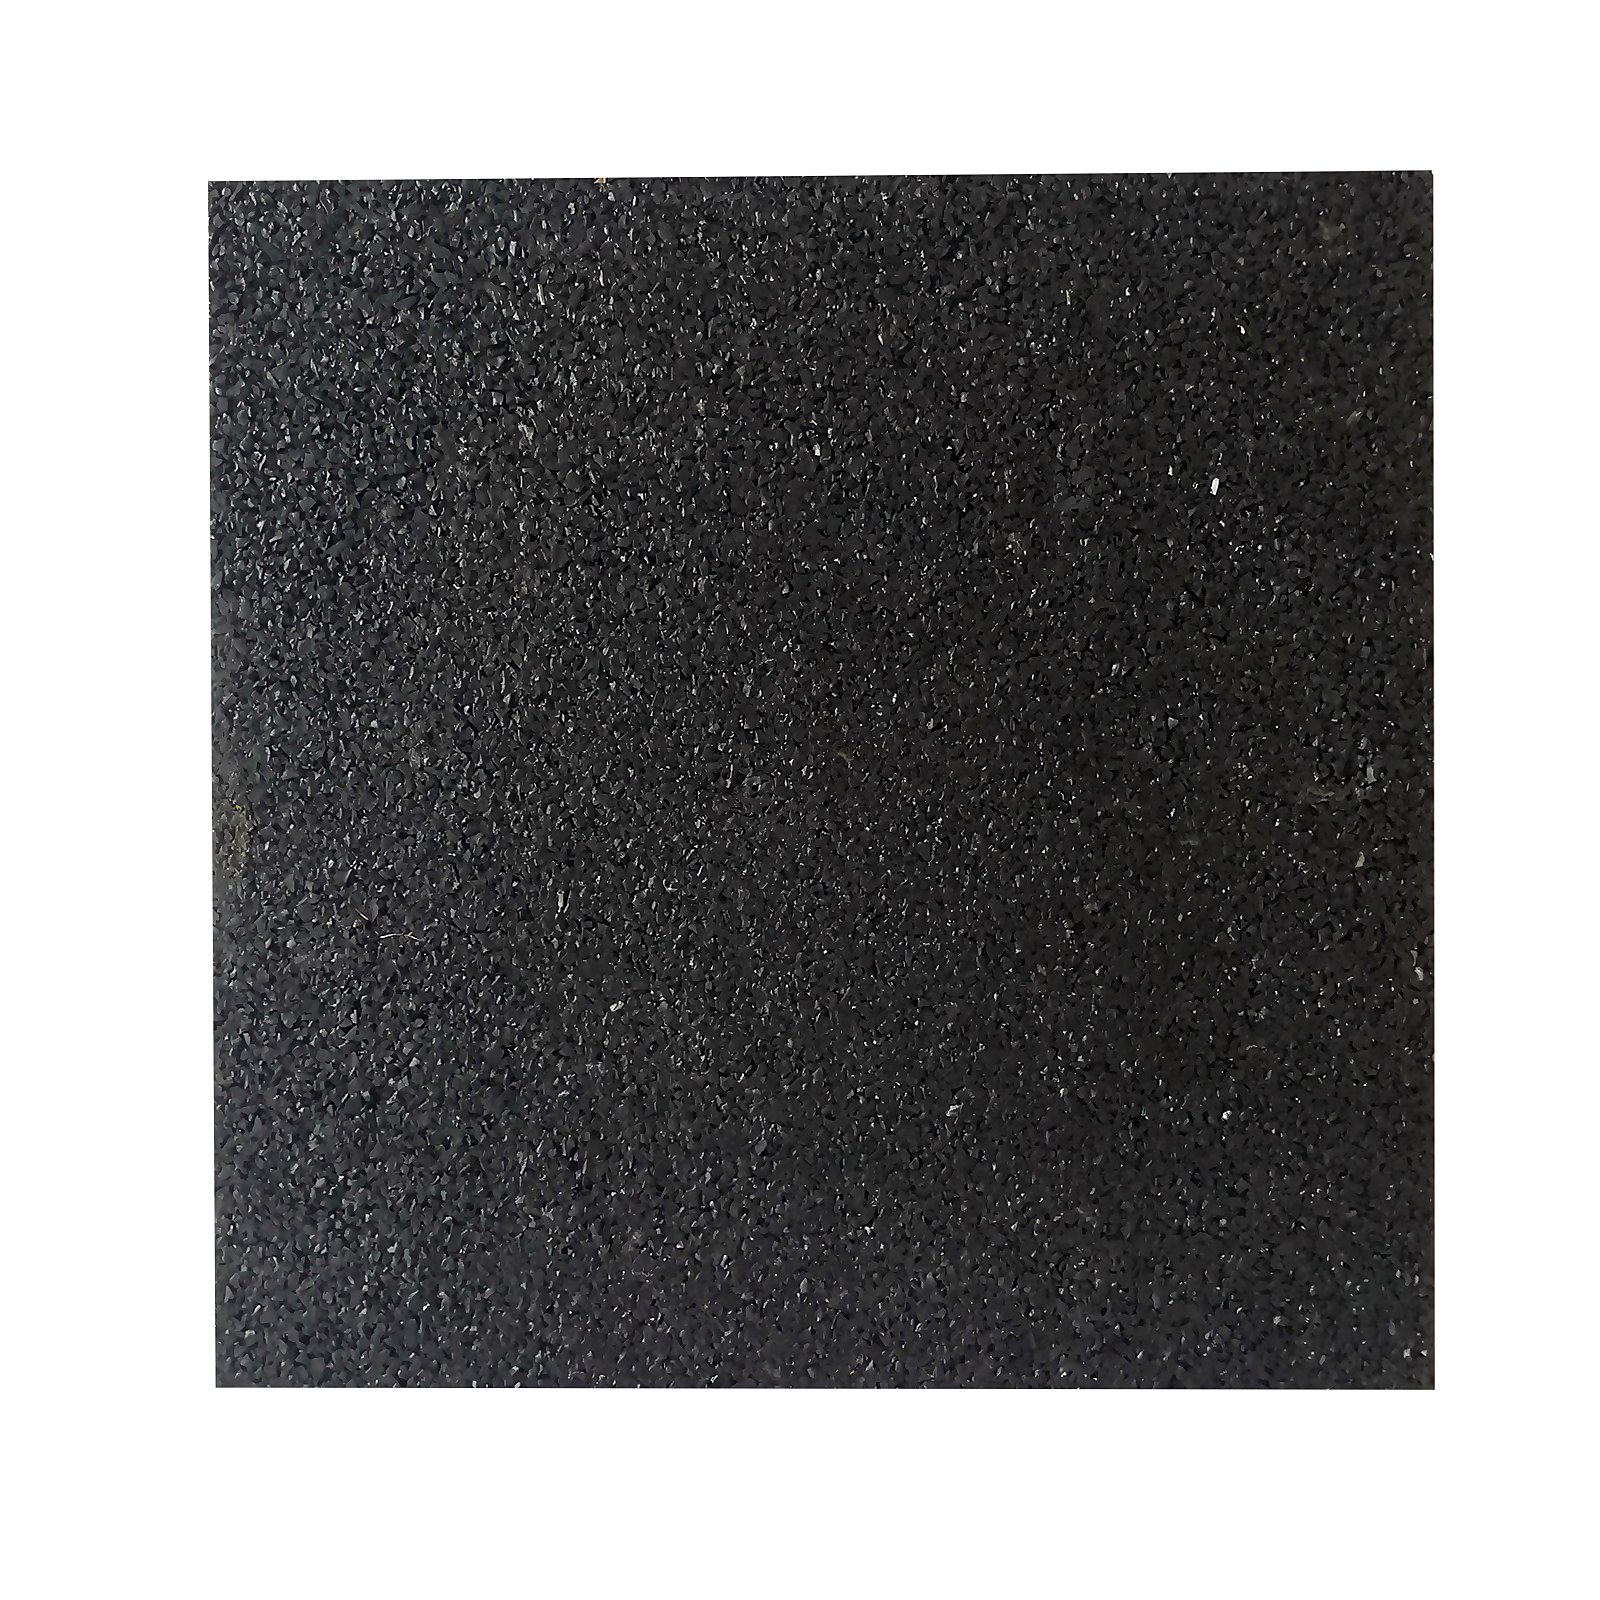 Photo of Rubber Tile Black 300mm